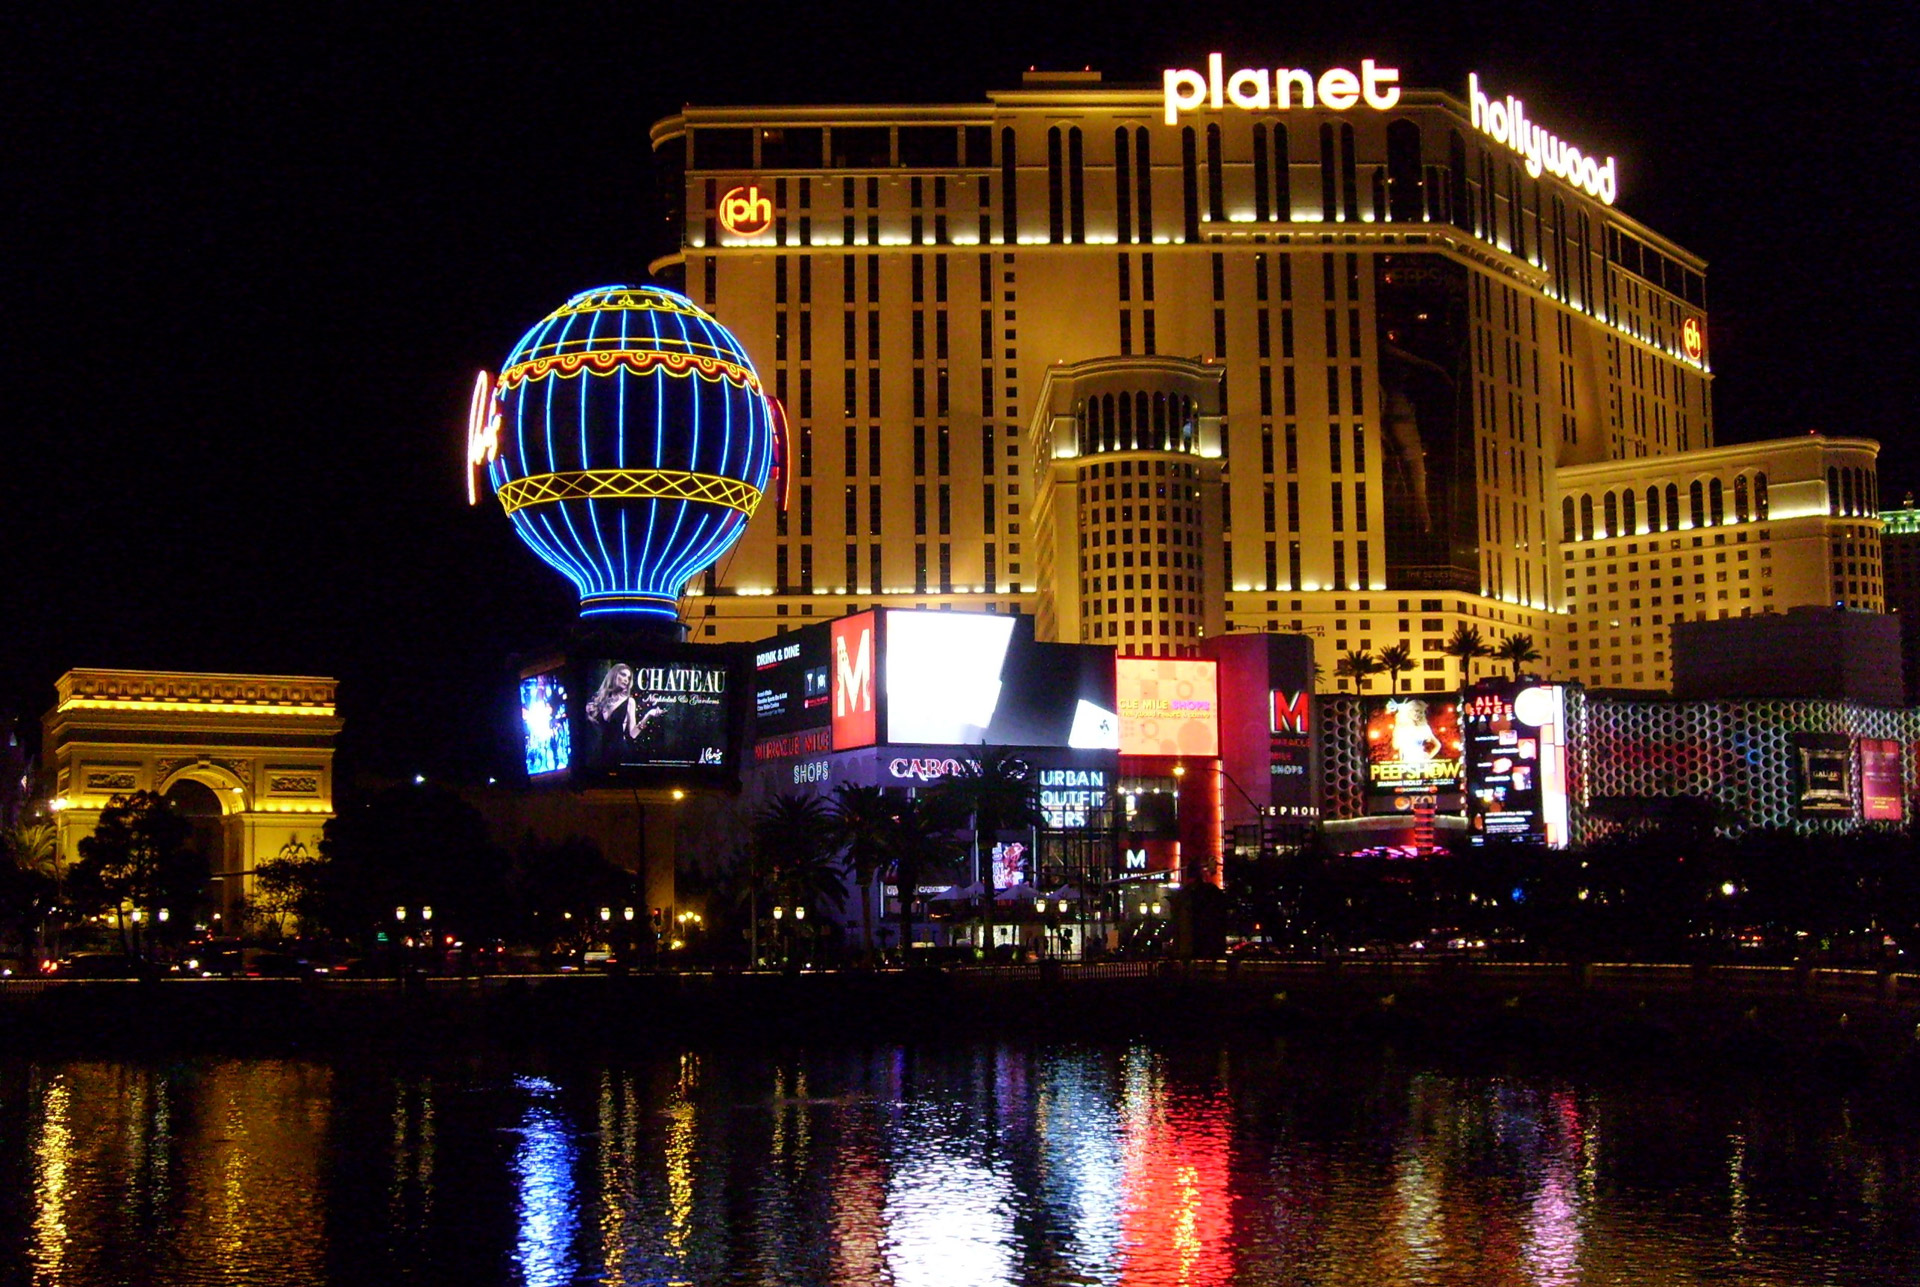 Planethollywood Las Vegas